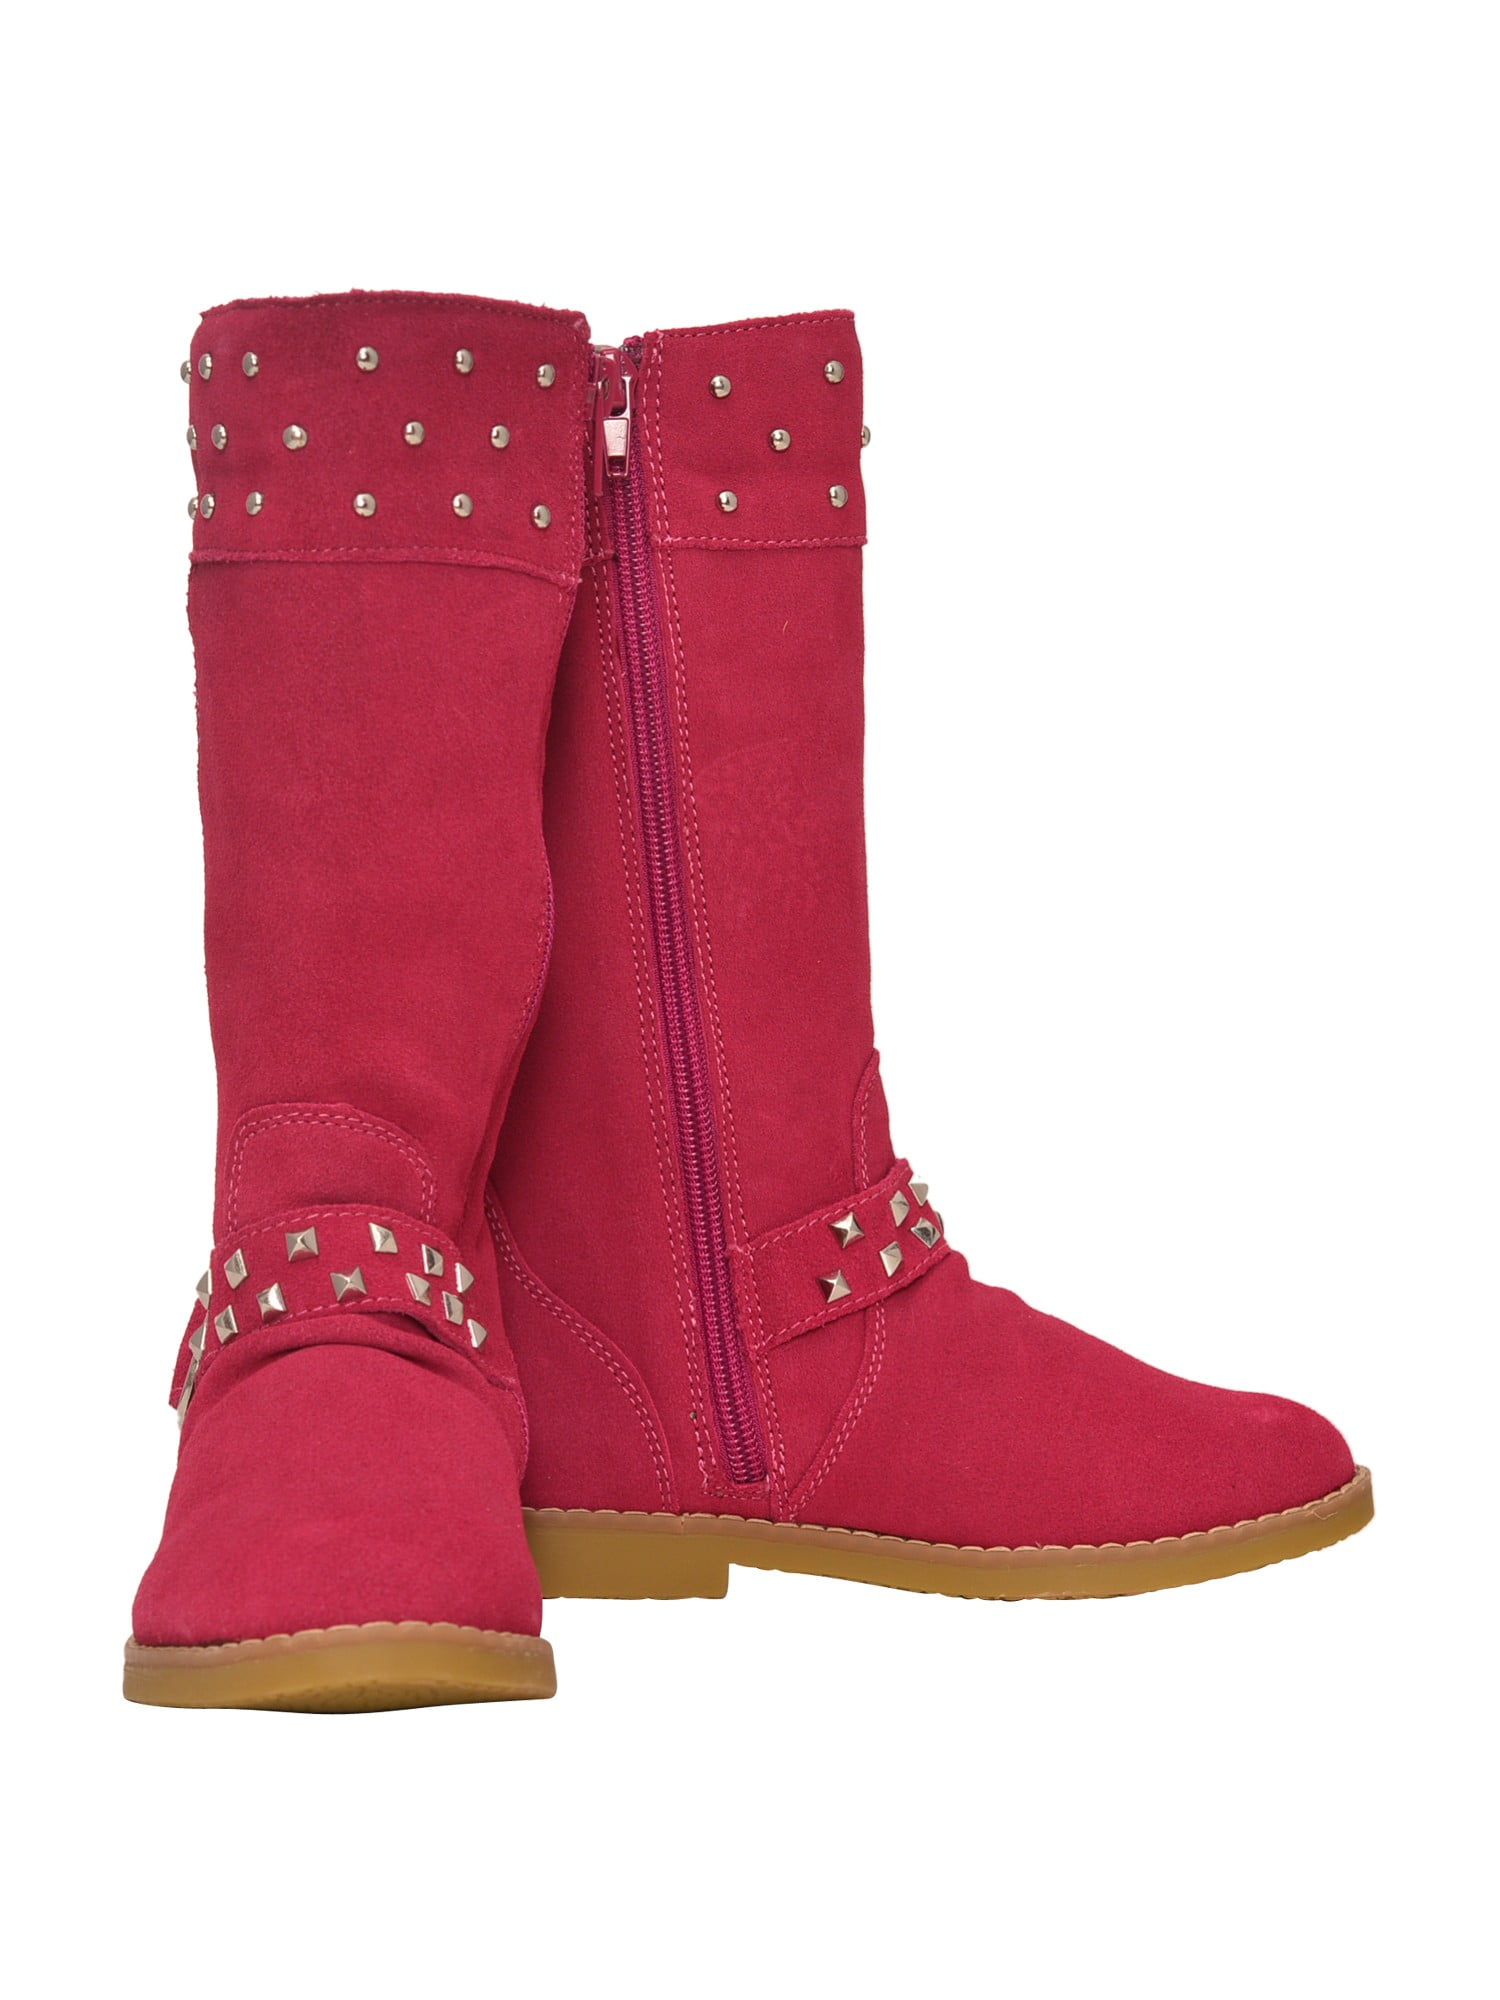 Laura Ashley Toddler Girls Boots SIZE 5 Burgundy Faux Fur Pink Flowers Zipper 